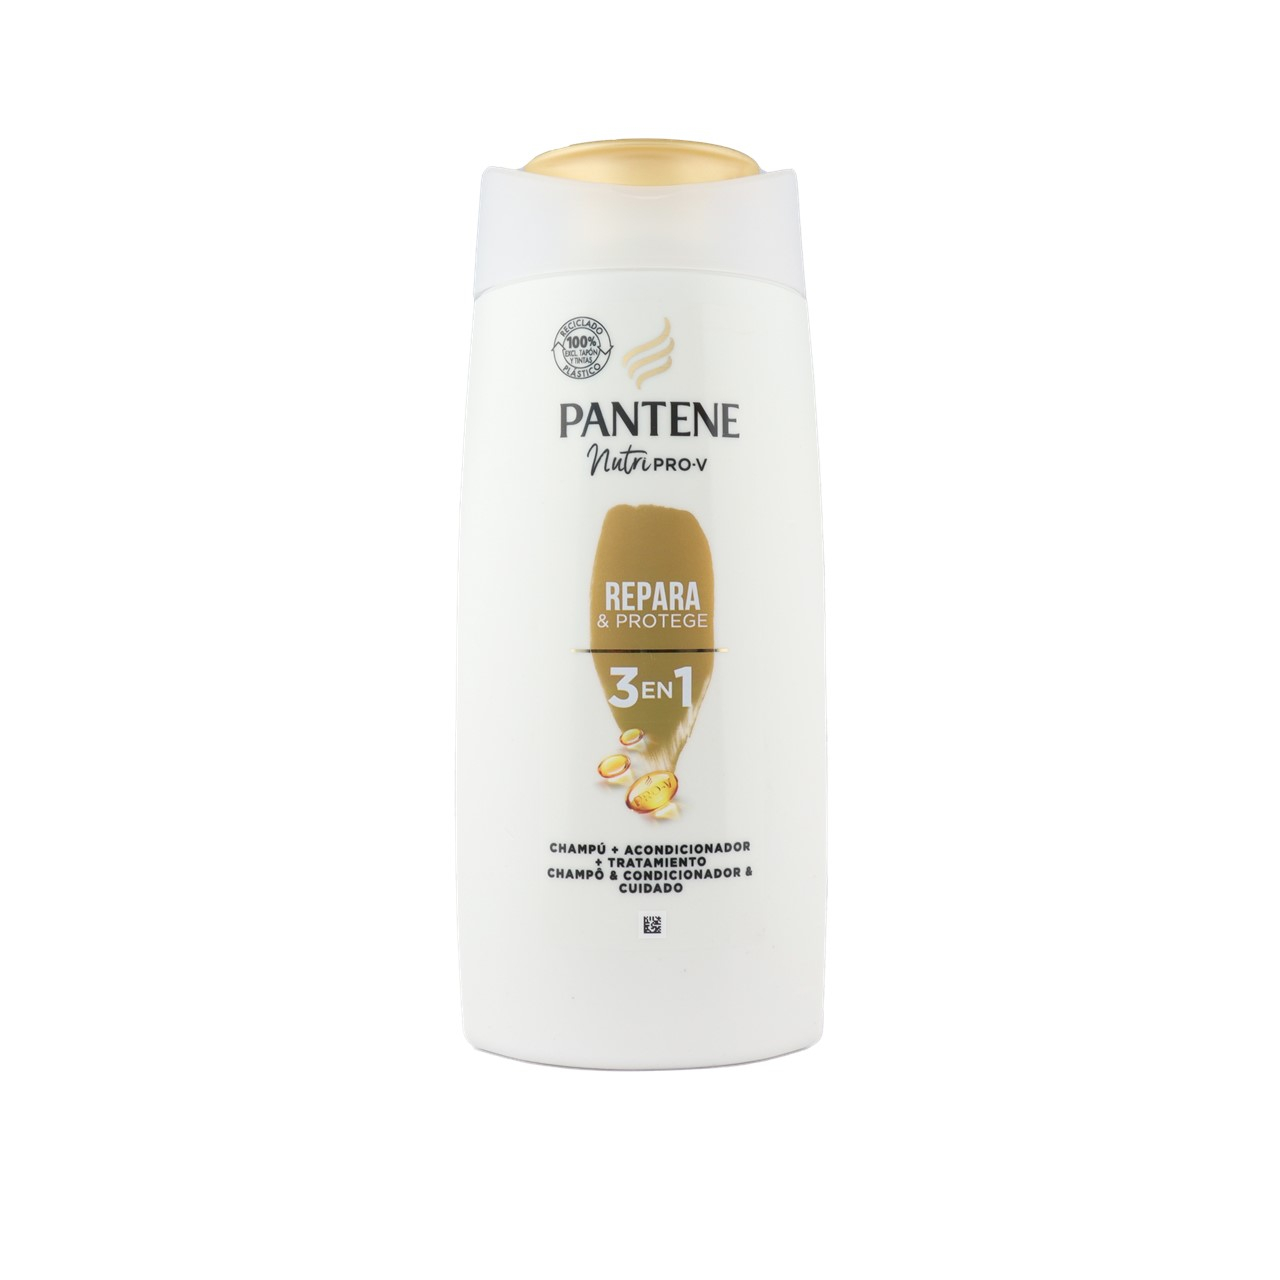 Pantene Nutri Pro-V Repair & Protect 3in1 Shampoo 675ml